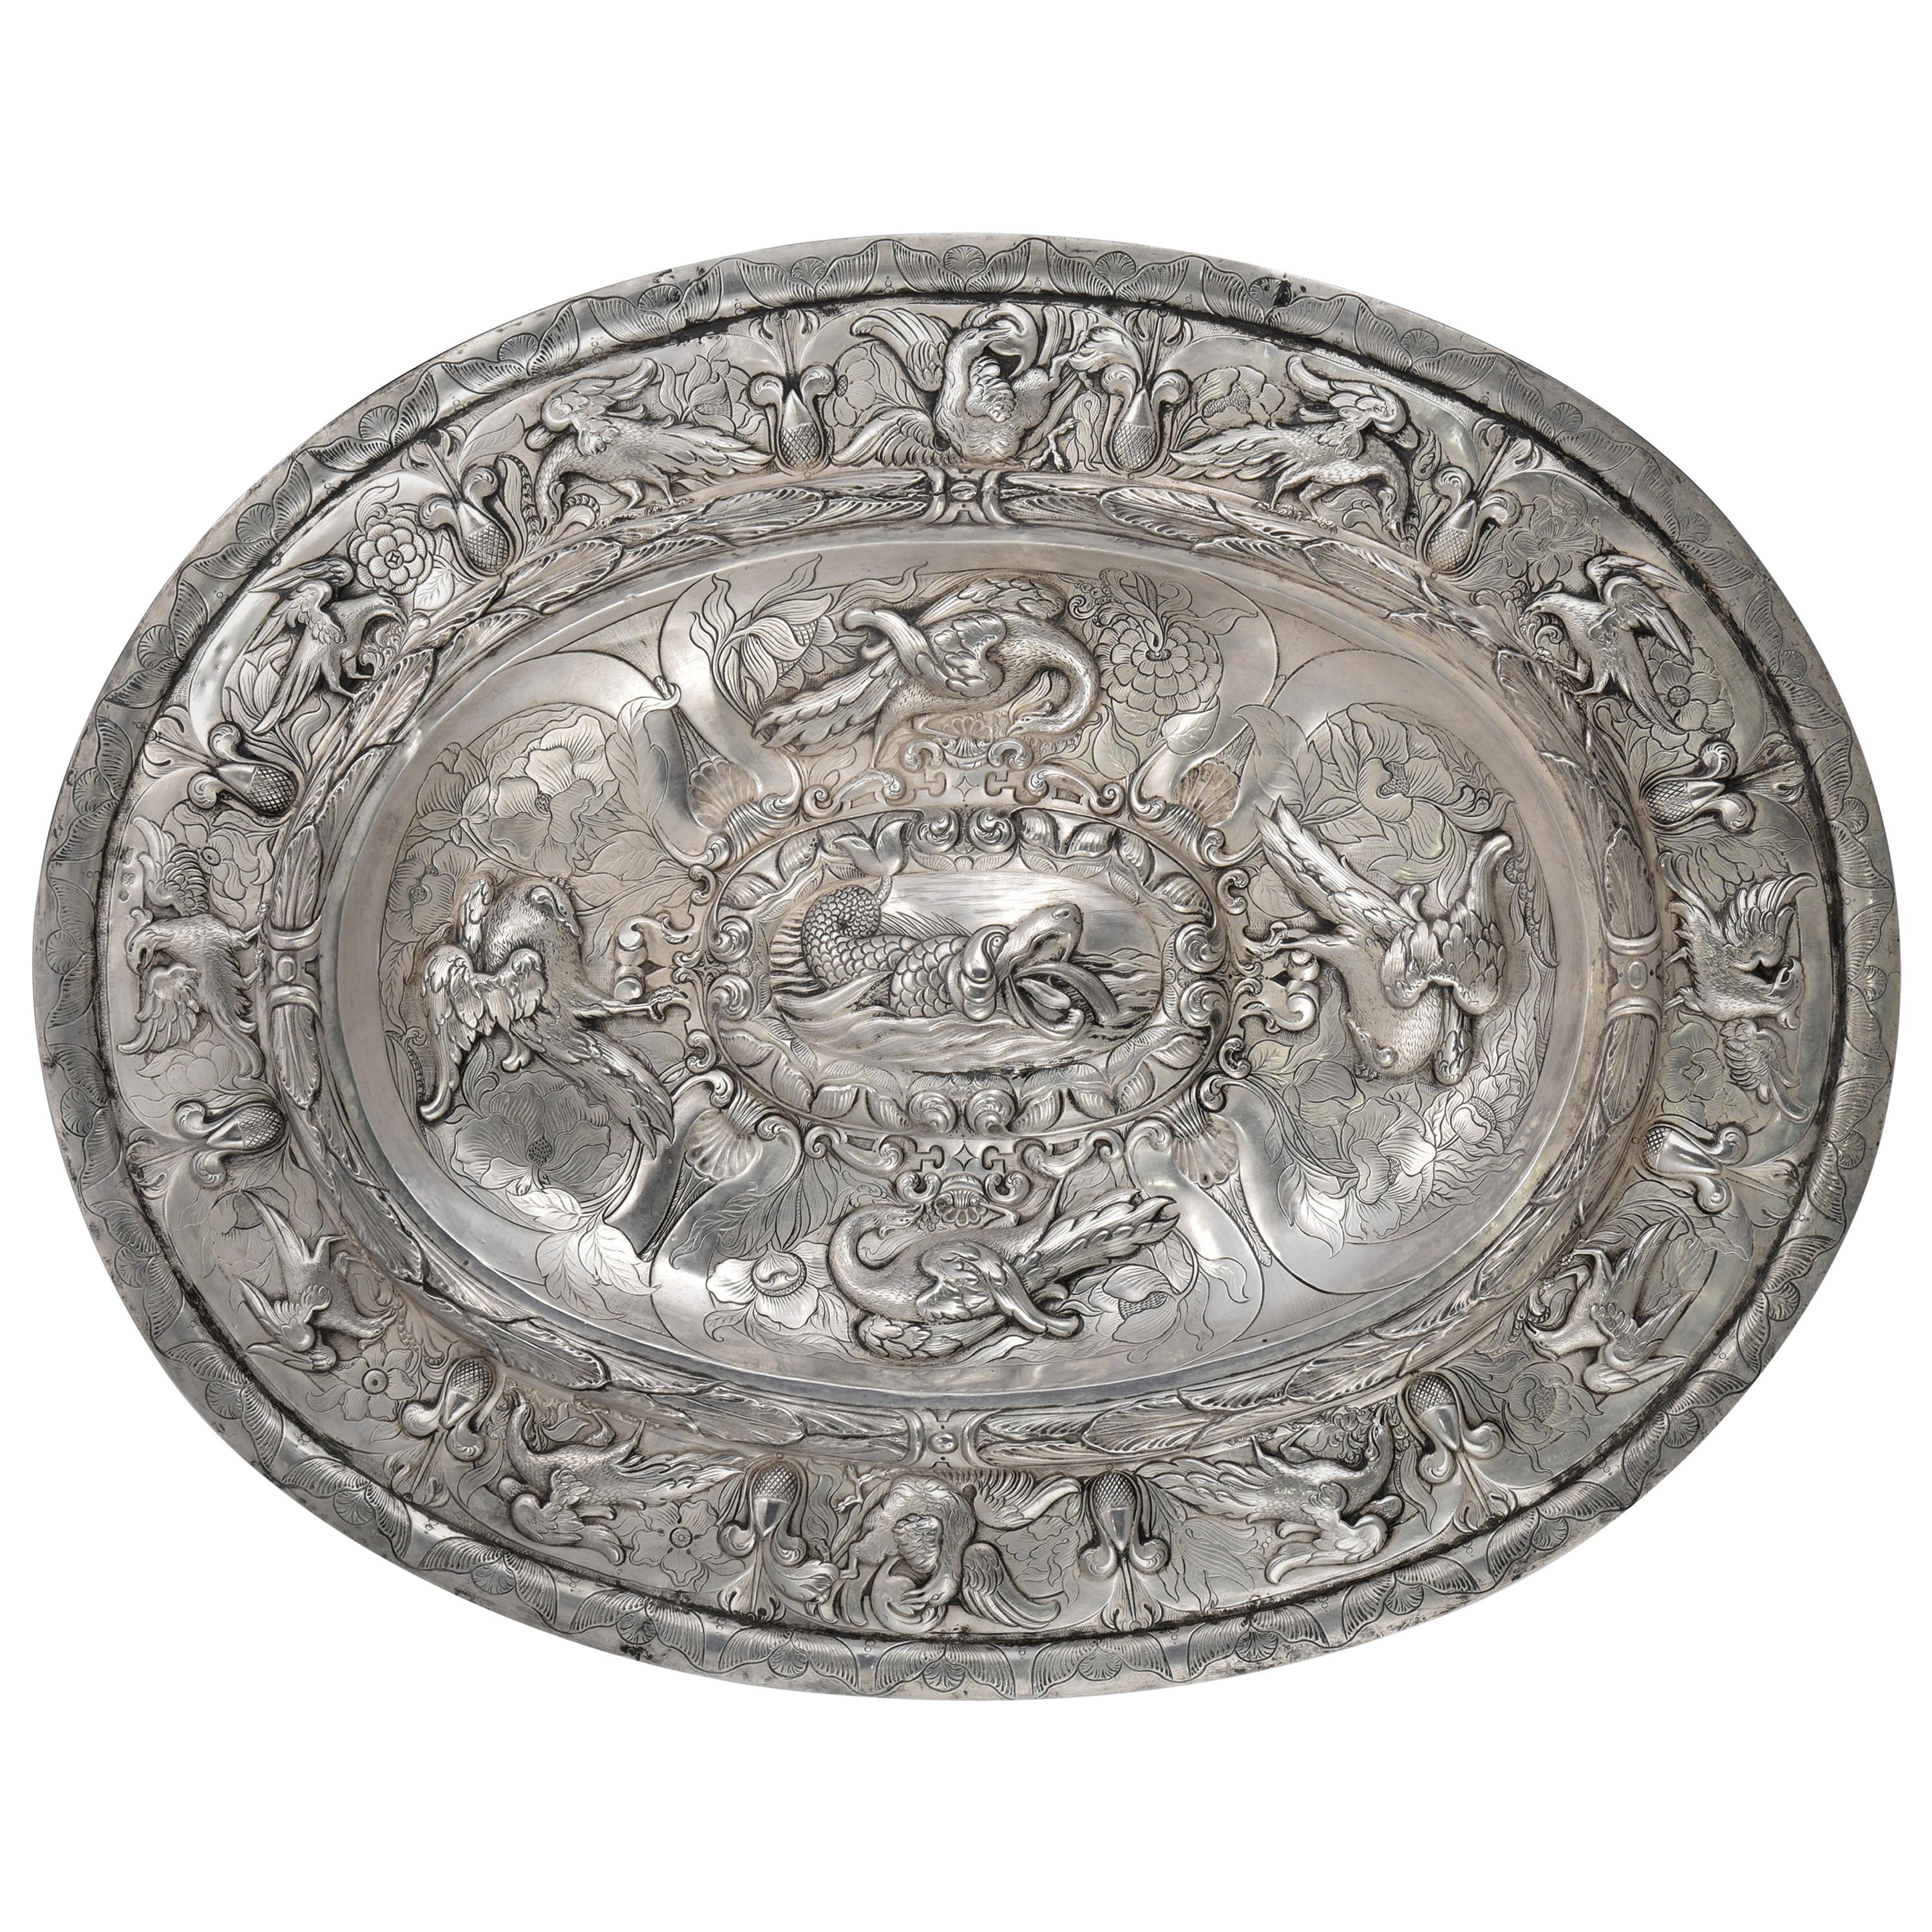 Solid Silver Oval Tray, Manuel Tene, Granada, Spain, 1755, with Hallmarks